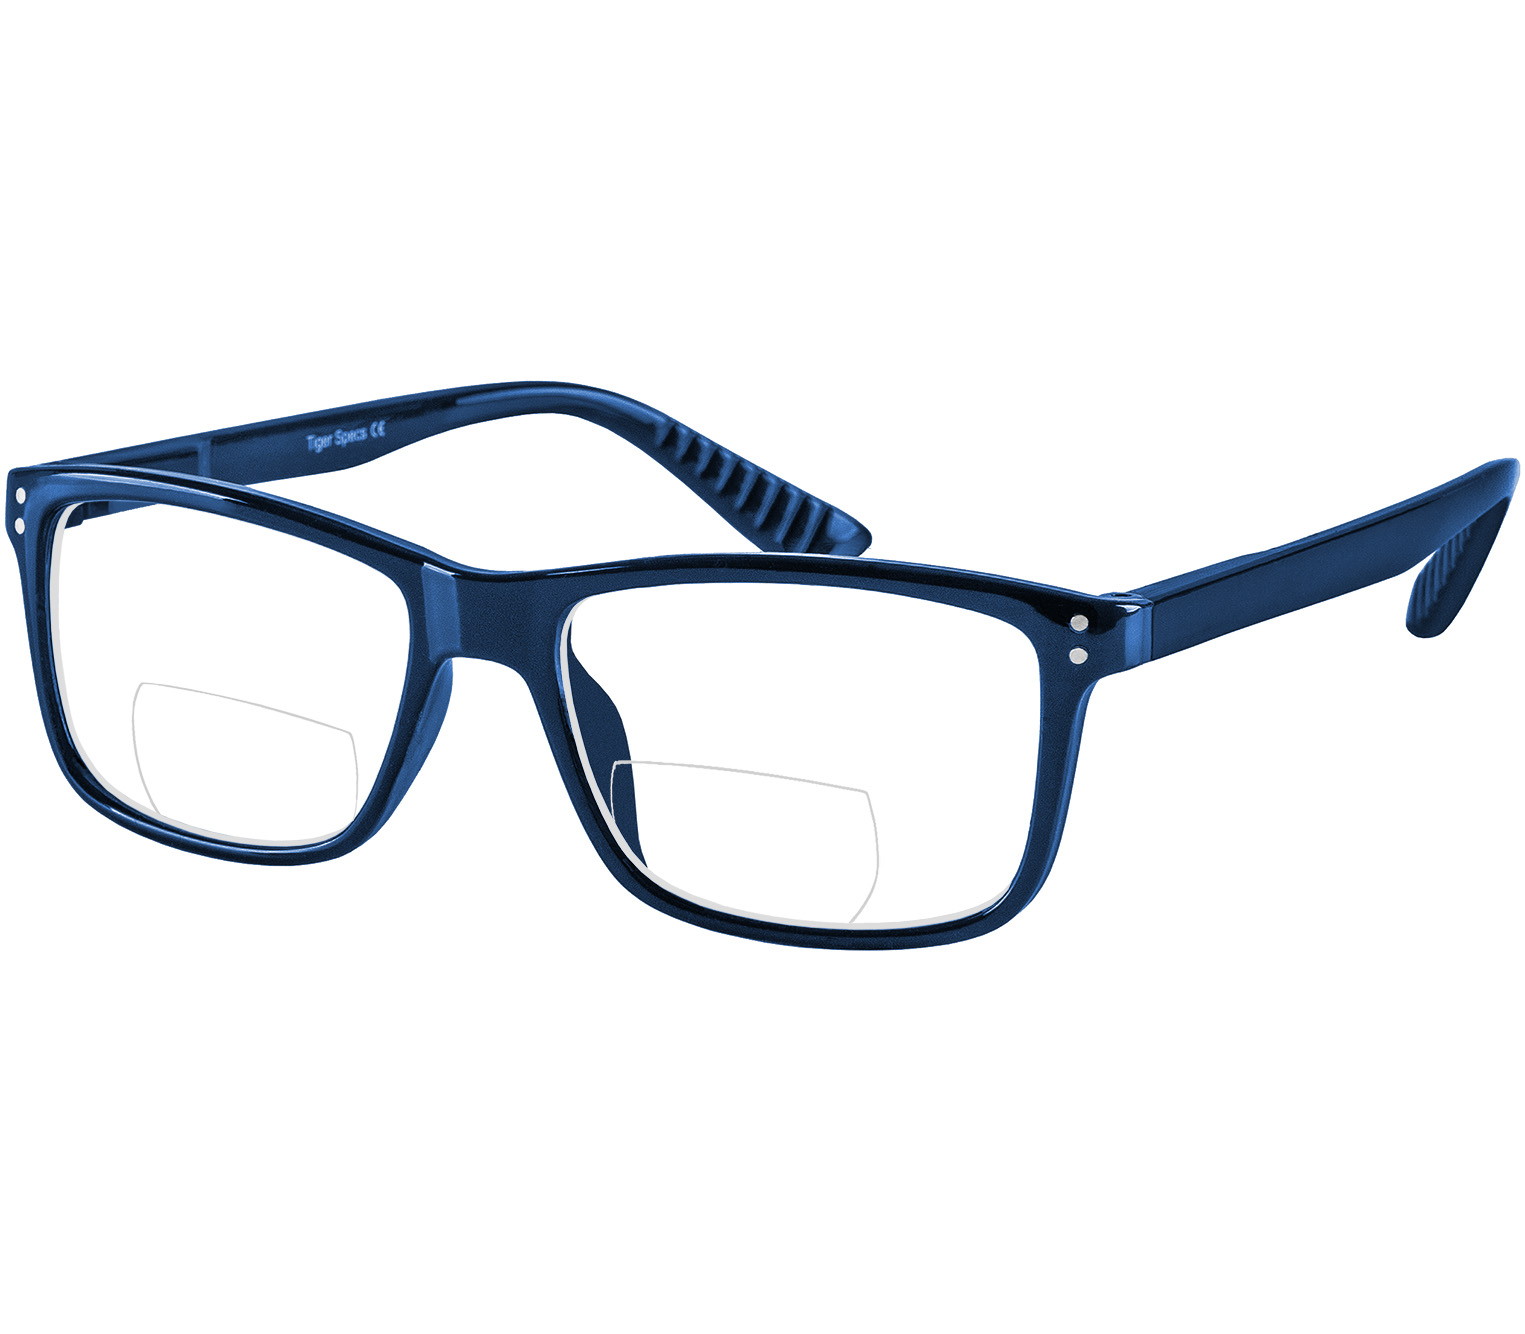 Main Image (Angle) - Dexter Bifocal (Blue) Reading Glasses